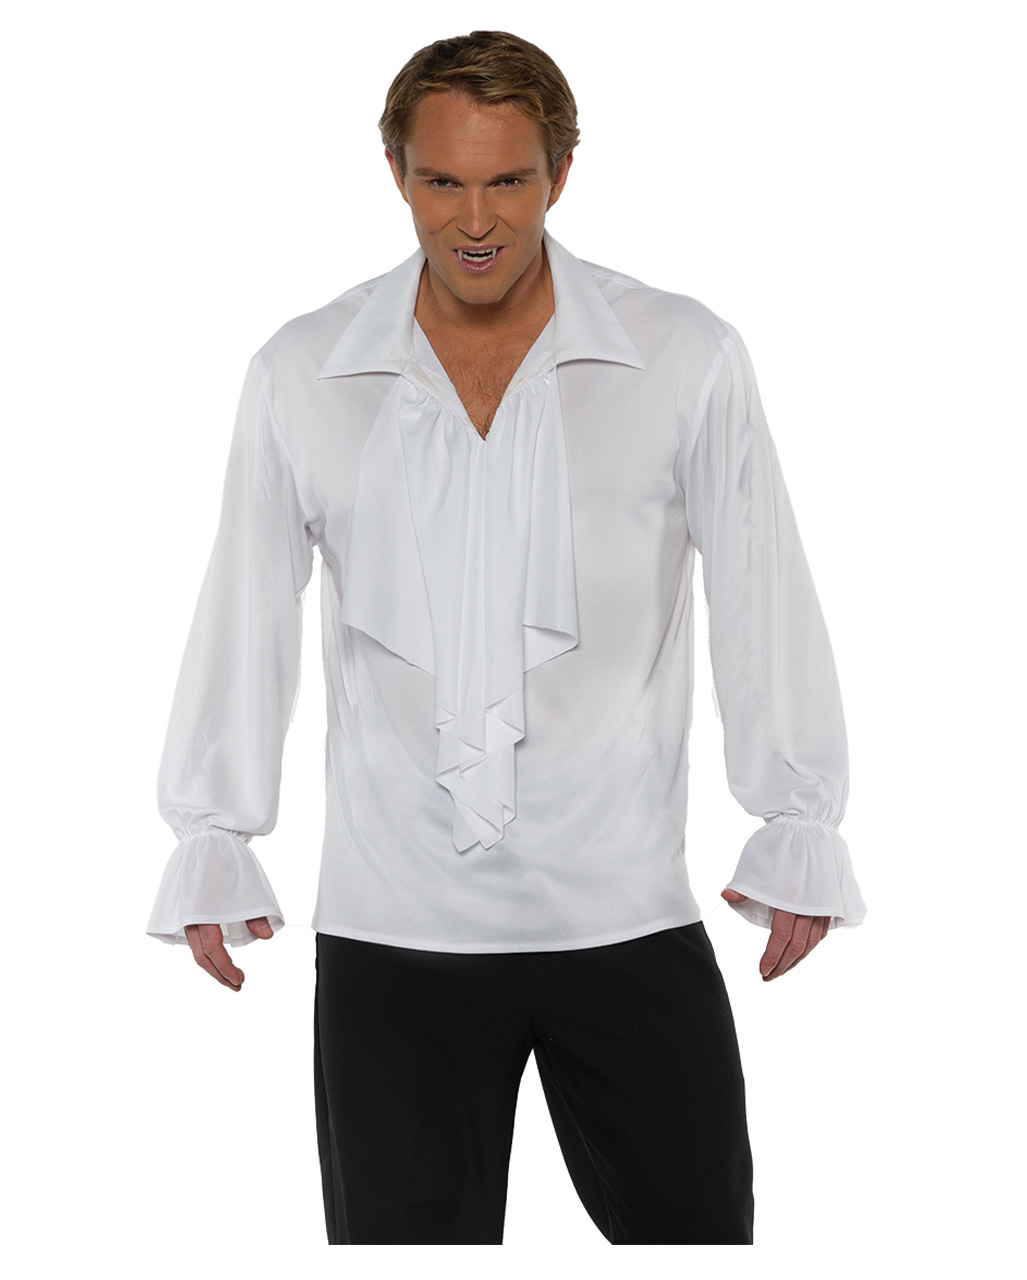 Vampire Shirt With Frills for Halloween | Horror-Shop.com